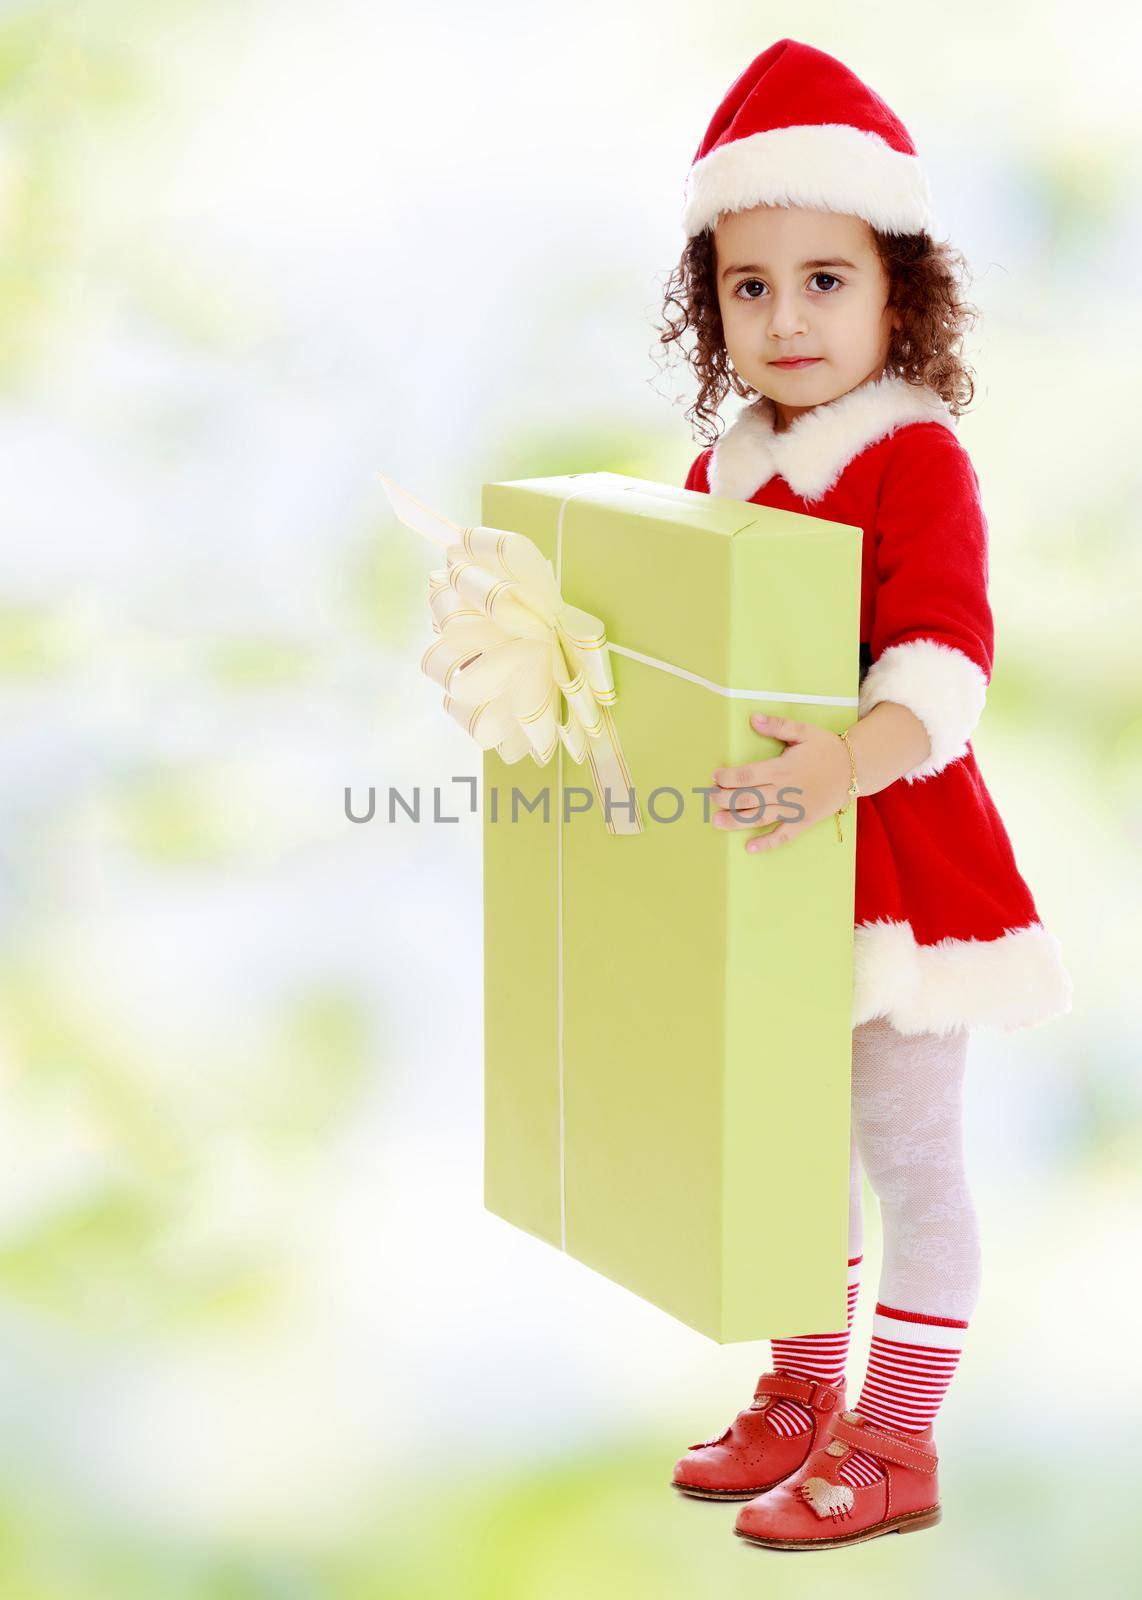 Little girl in costume of Santa Claus with gift by kolesnikov_studio